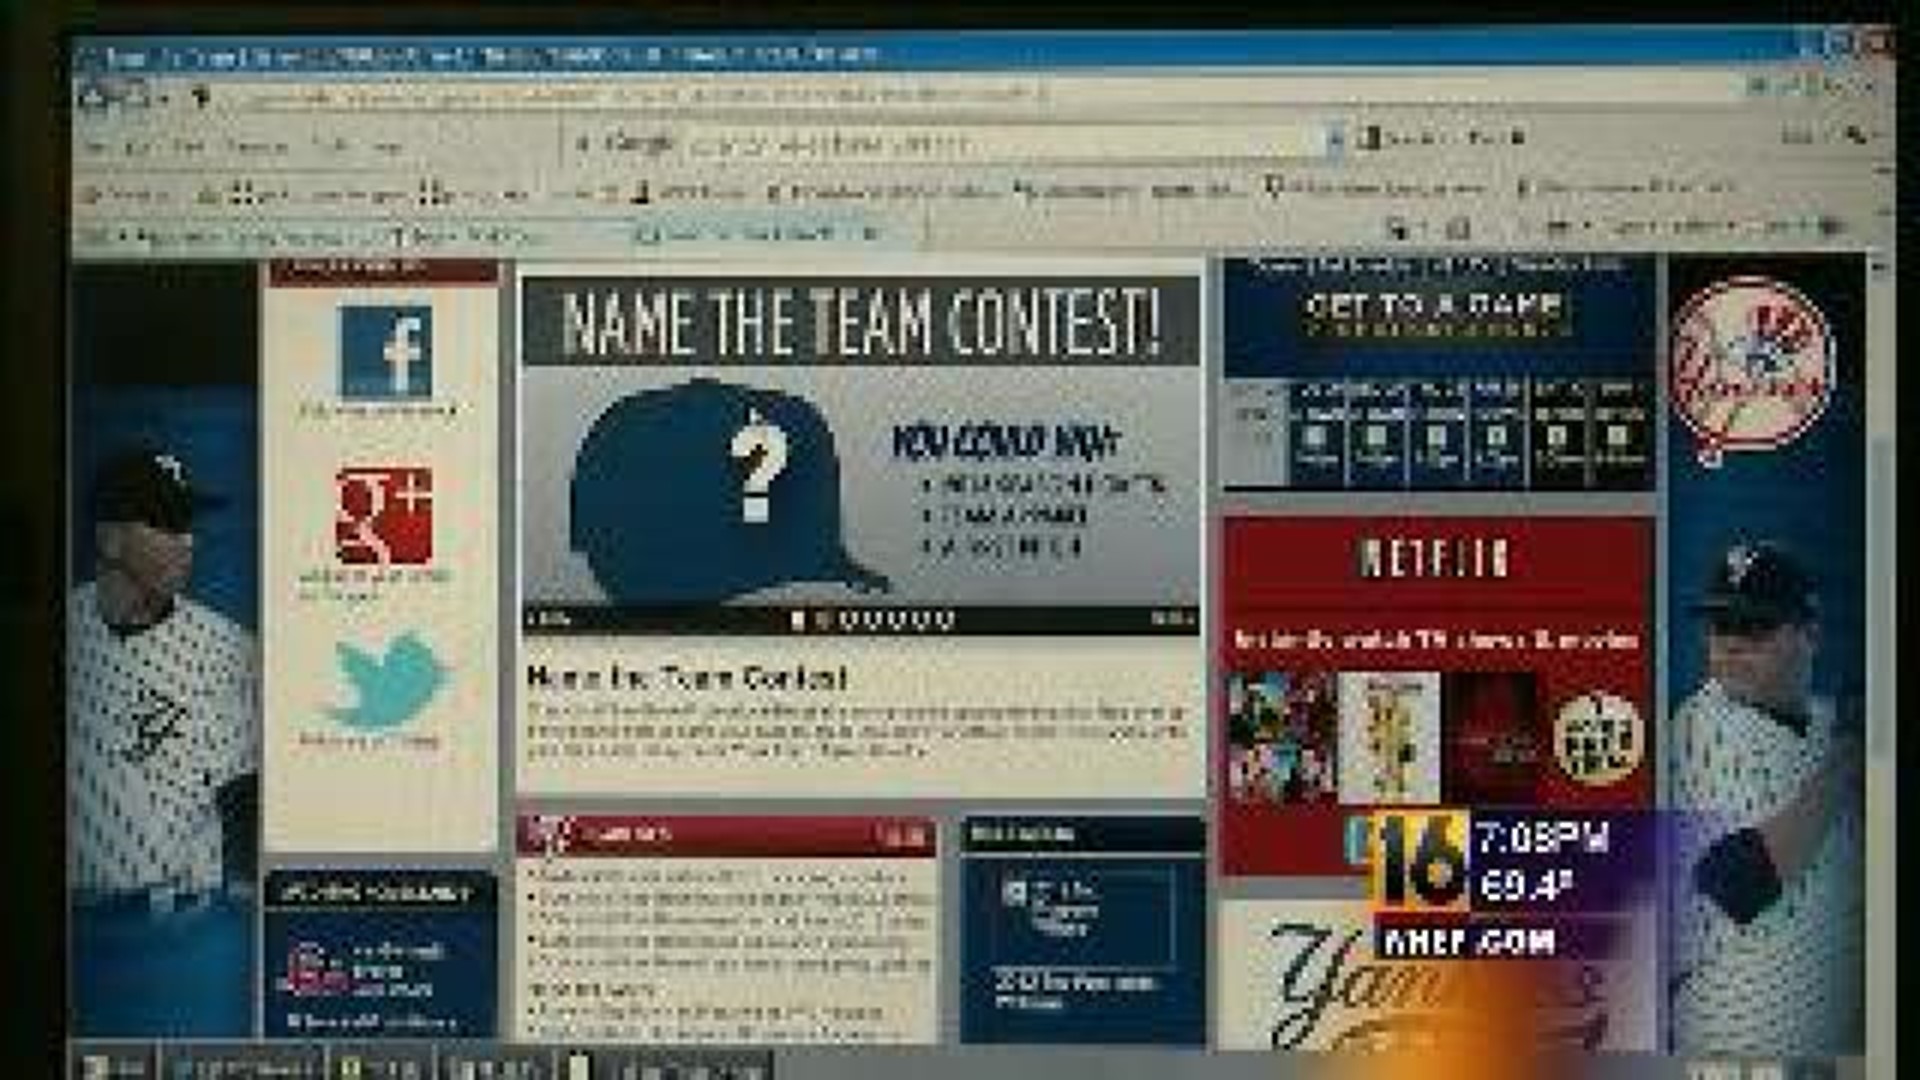 Scranton Wilkes-Barre Yankees "Name the Team" Contest